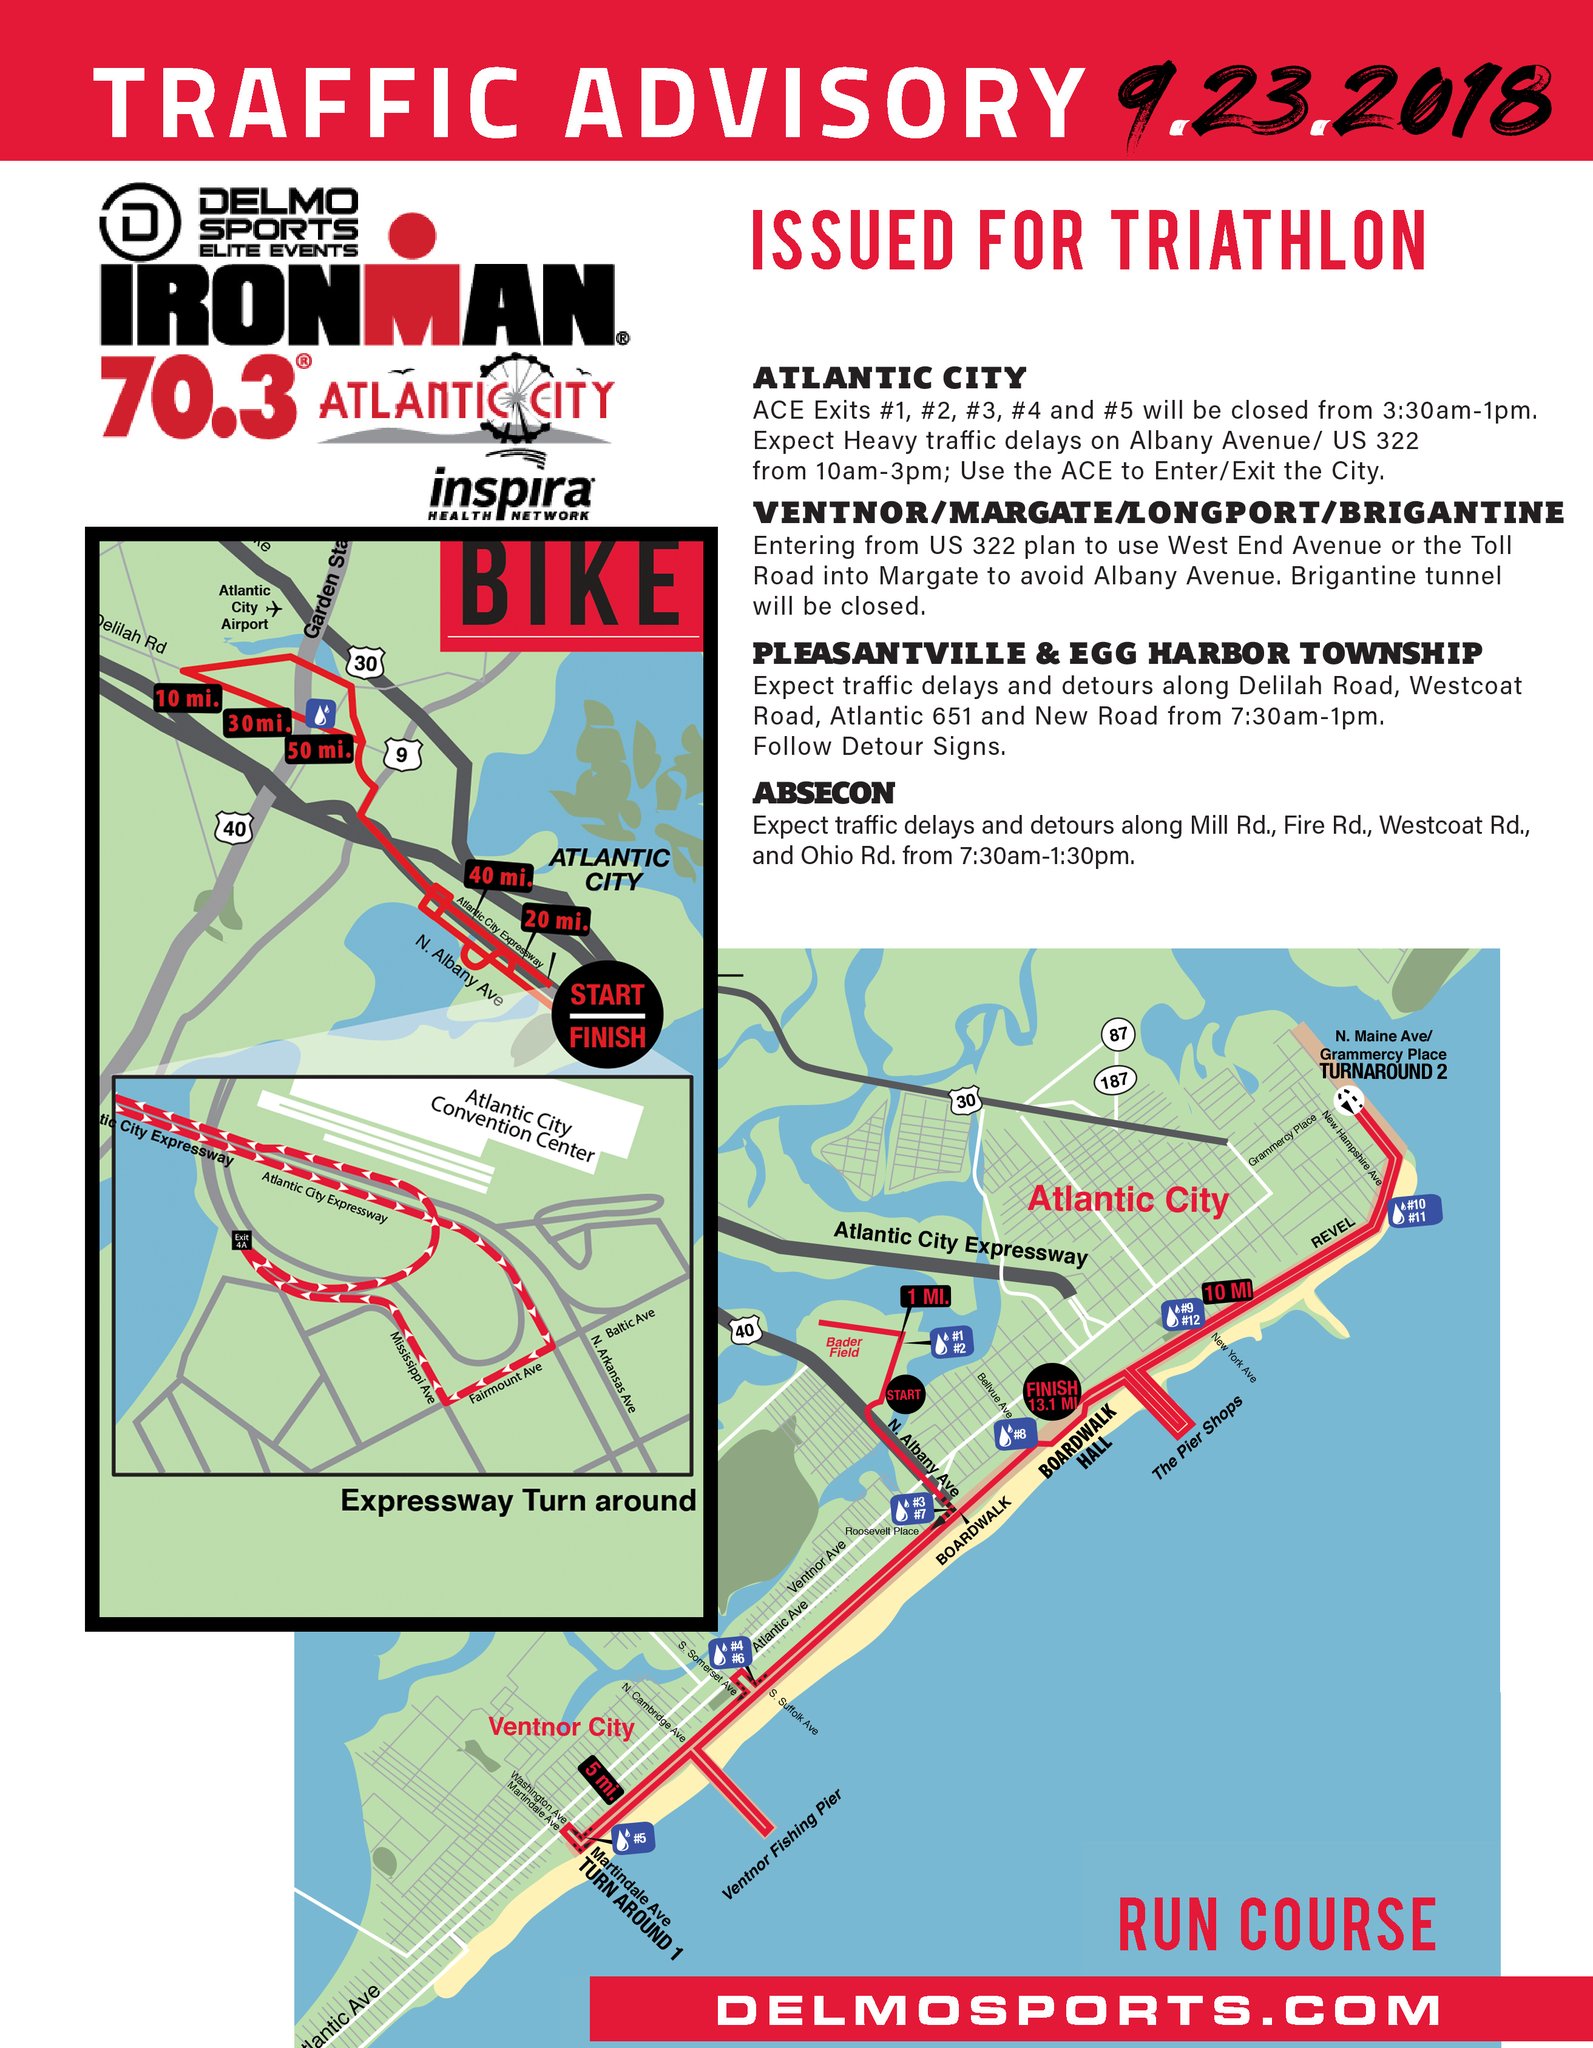 Traffic Advisory issued for Saturday’s Ironman triathlon DOWNBEACH